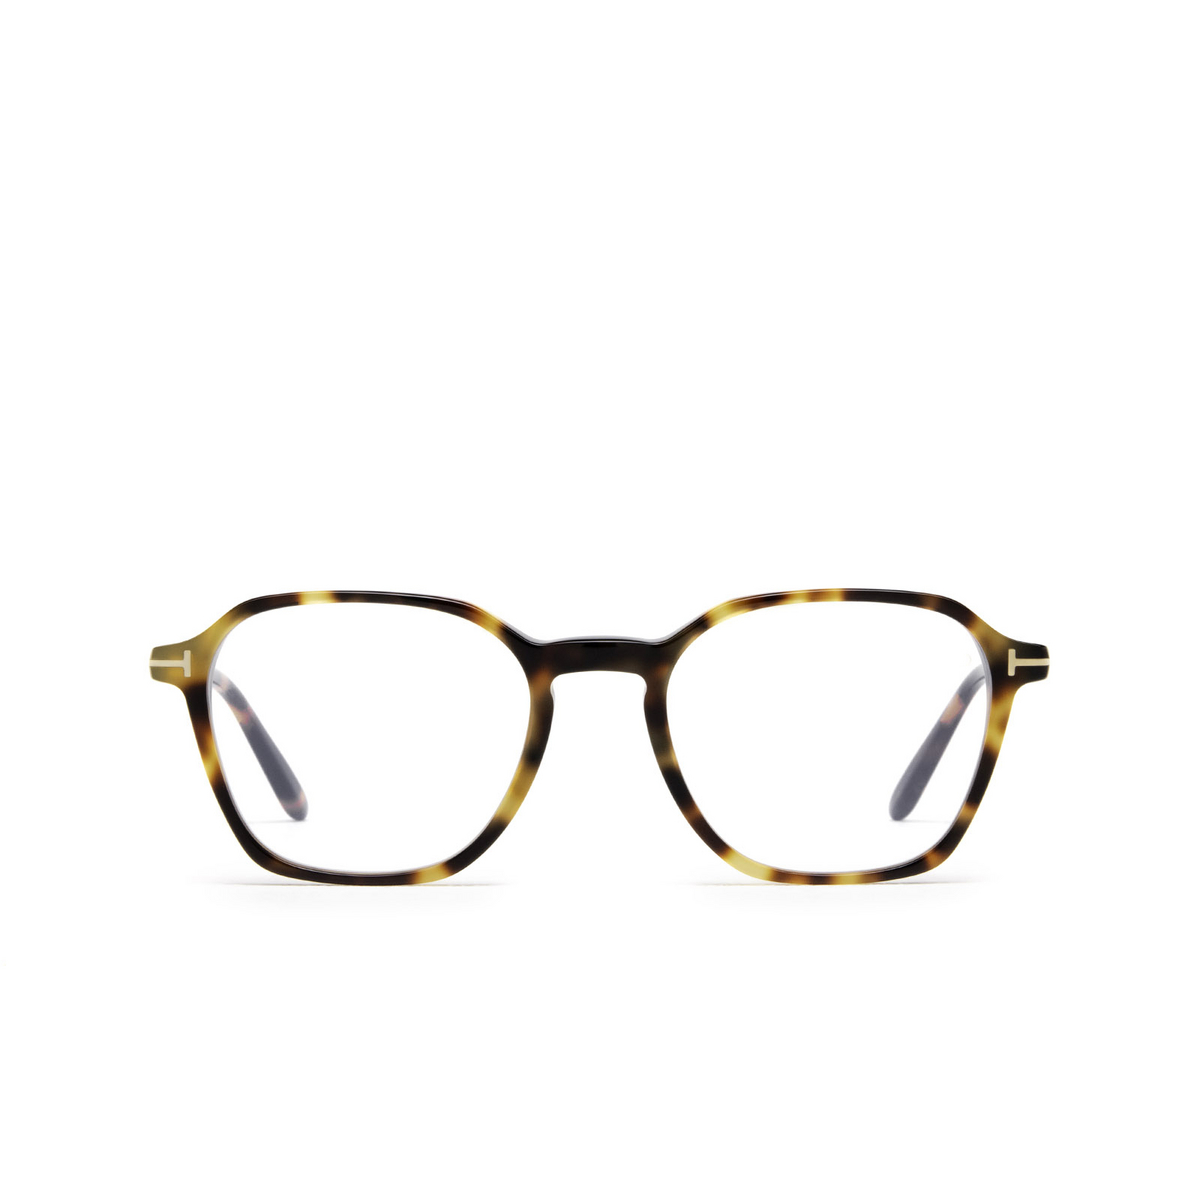 Tom Ford® Square Eyeglasses: FT5804-B color Blonde Havana 053 - front view.